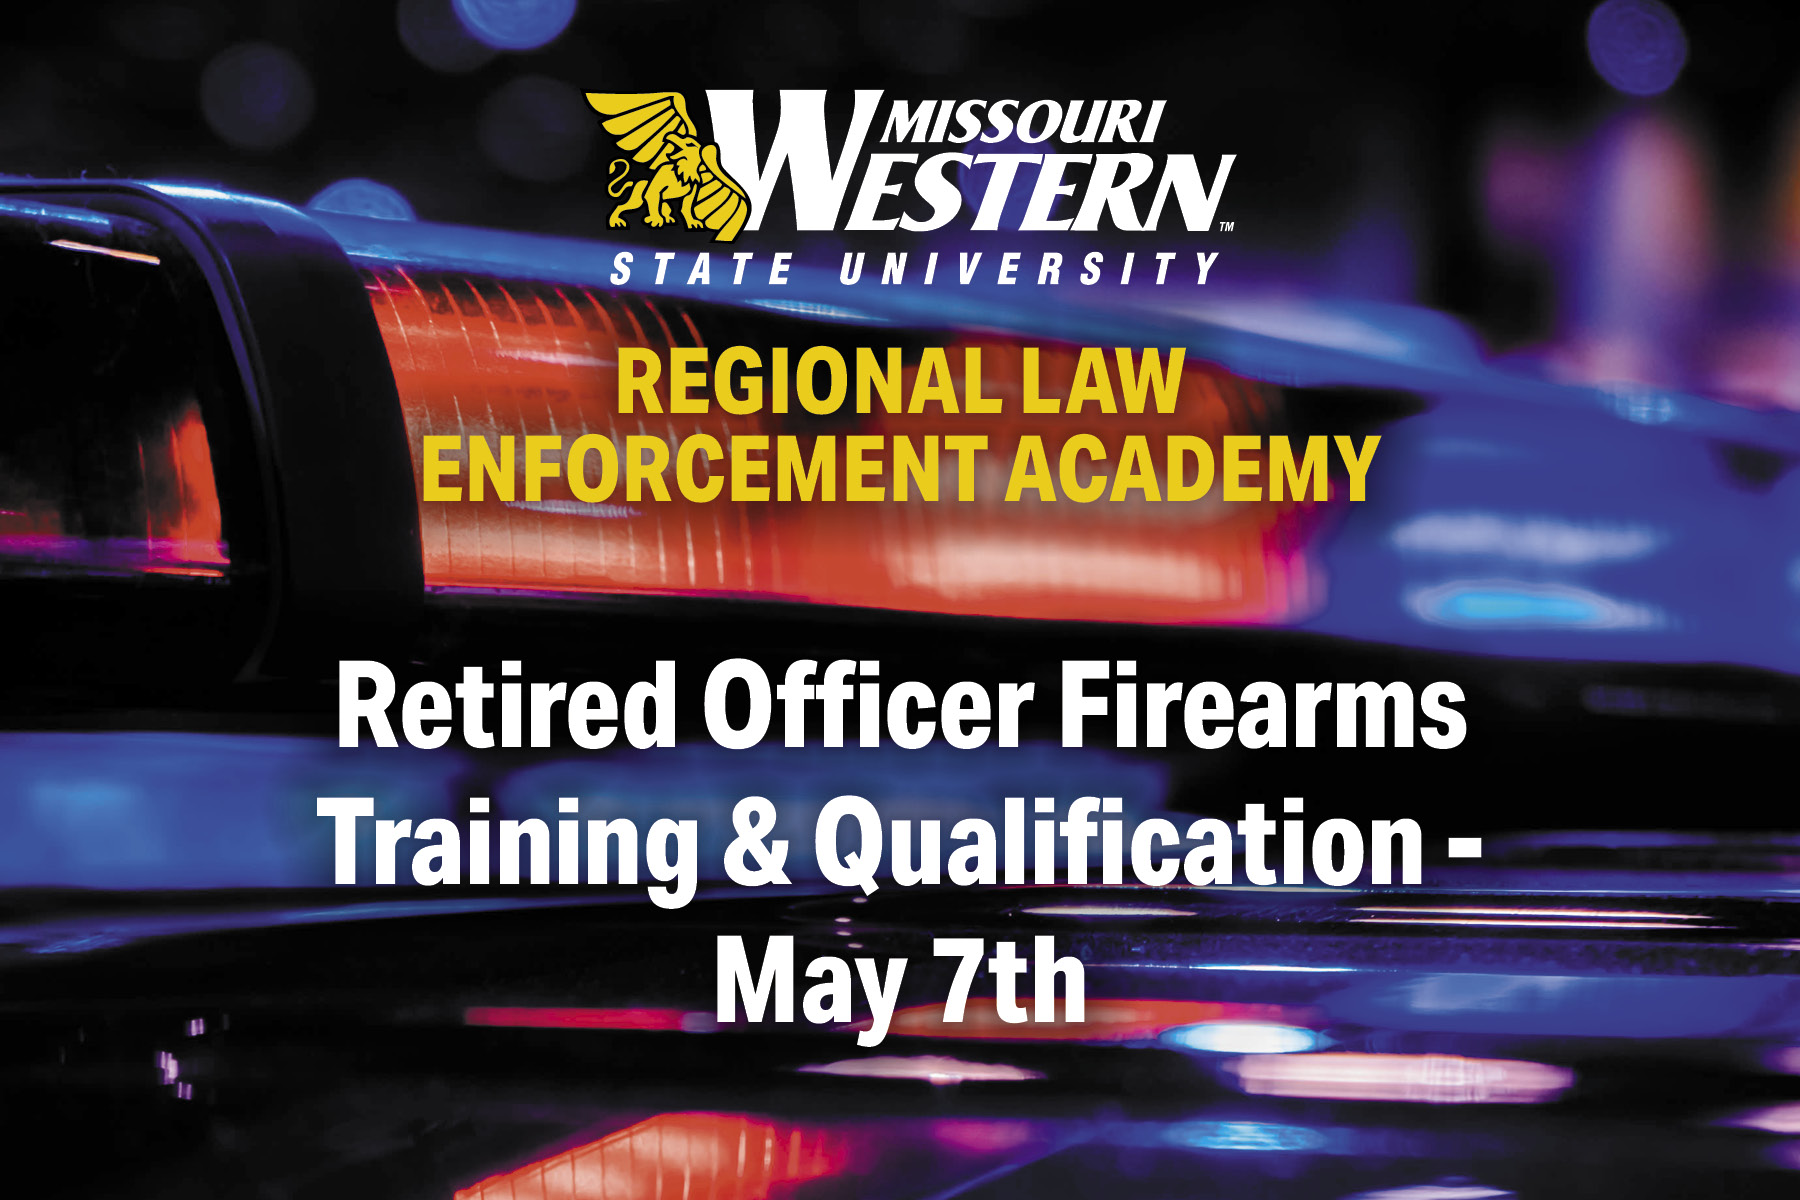 Retired officer firearms training flyer